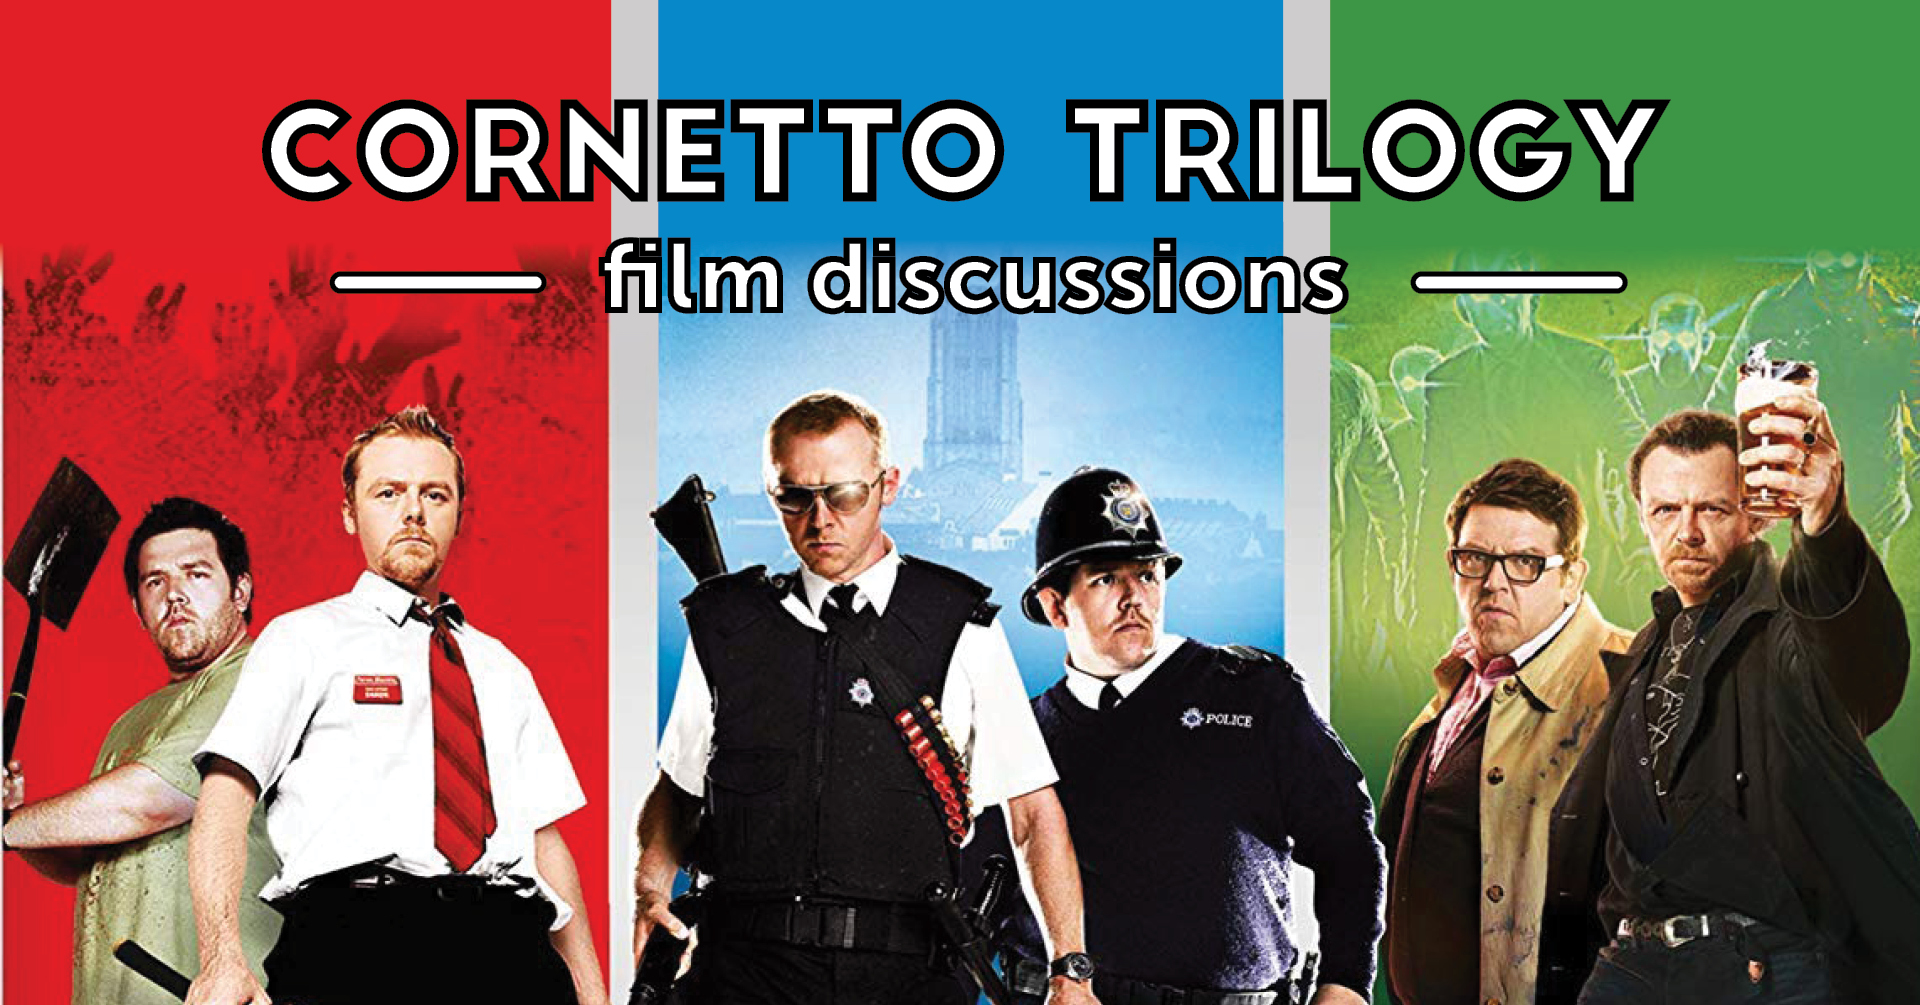 Cornetto Trilogy film anthology actors